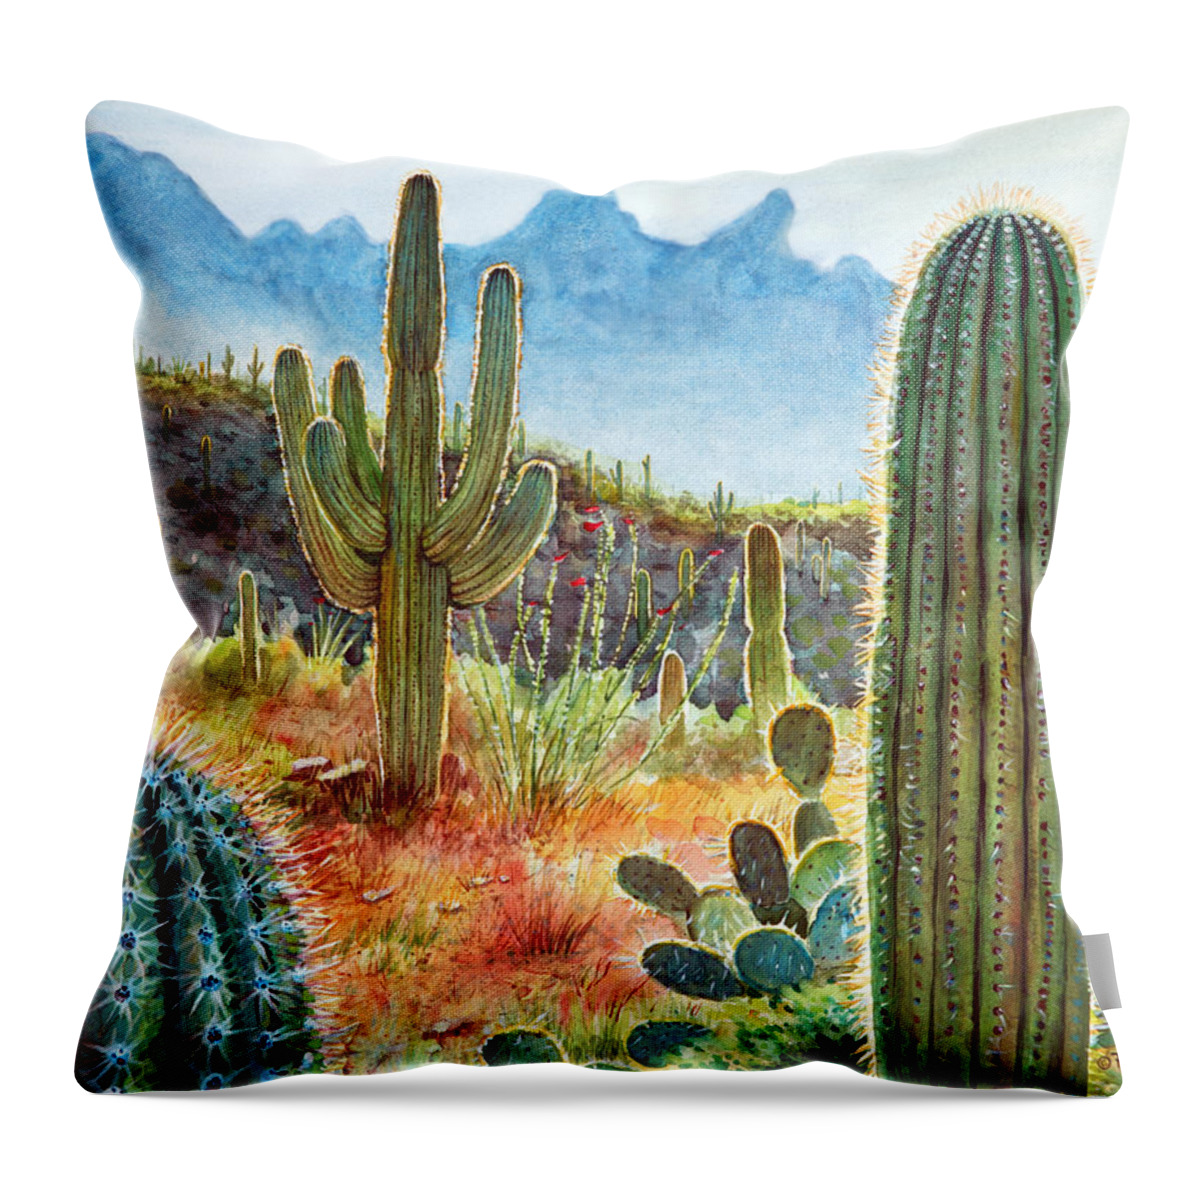 #faatoppicks Throw Pillow featuring the painting Desert Beauty by Frank Robert Dixon